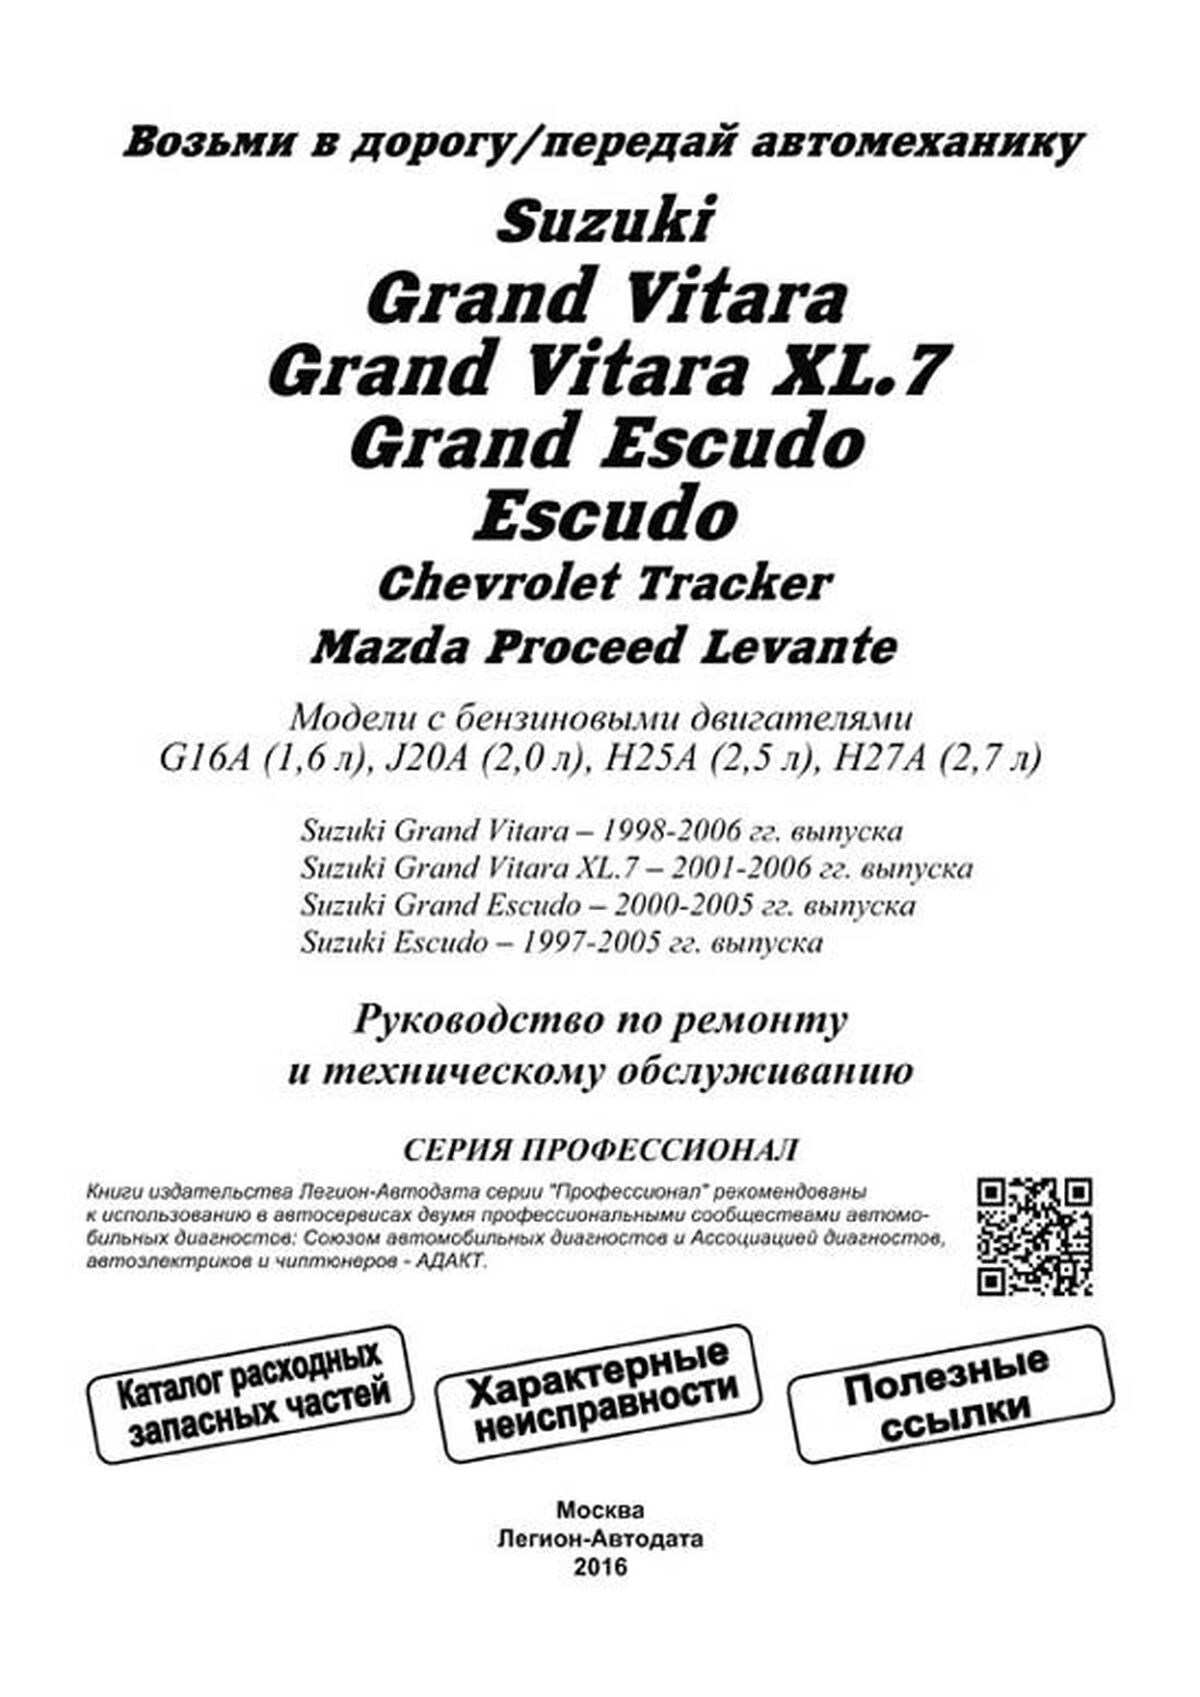 Книга: SUZUKI GRAND VITARA / CHEVROLET TRACKER / MAZDA LEVANTE (б) 1997-2004 г.в., рем., экспл., то, сер.ПРОФ. | Легион-Aвтодата